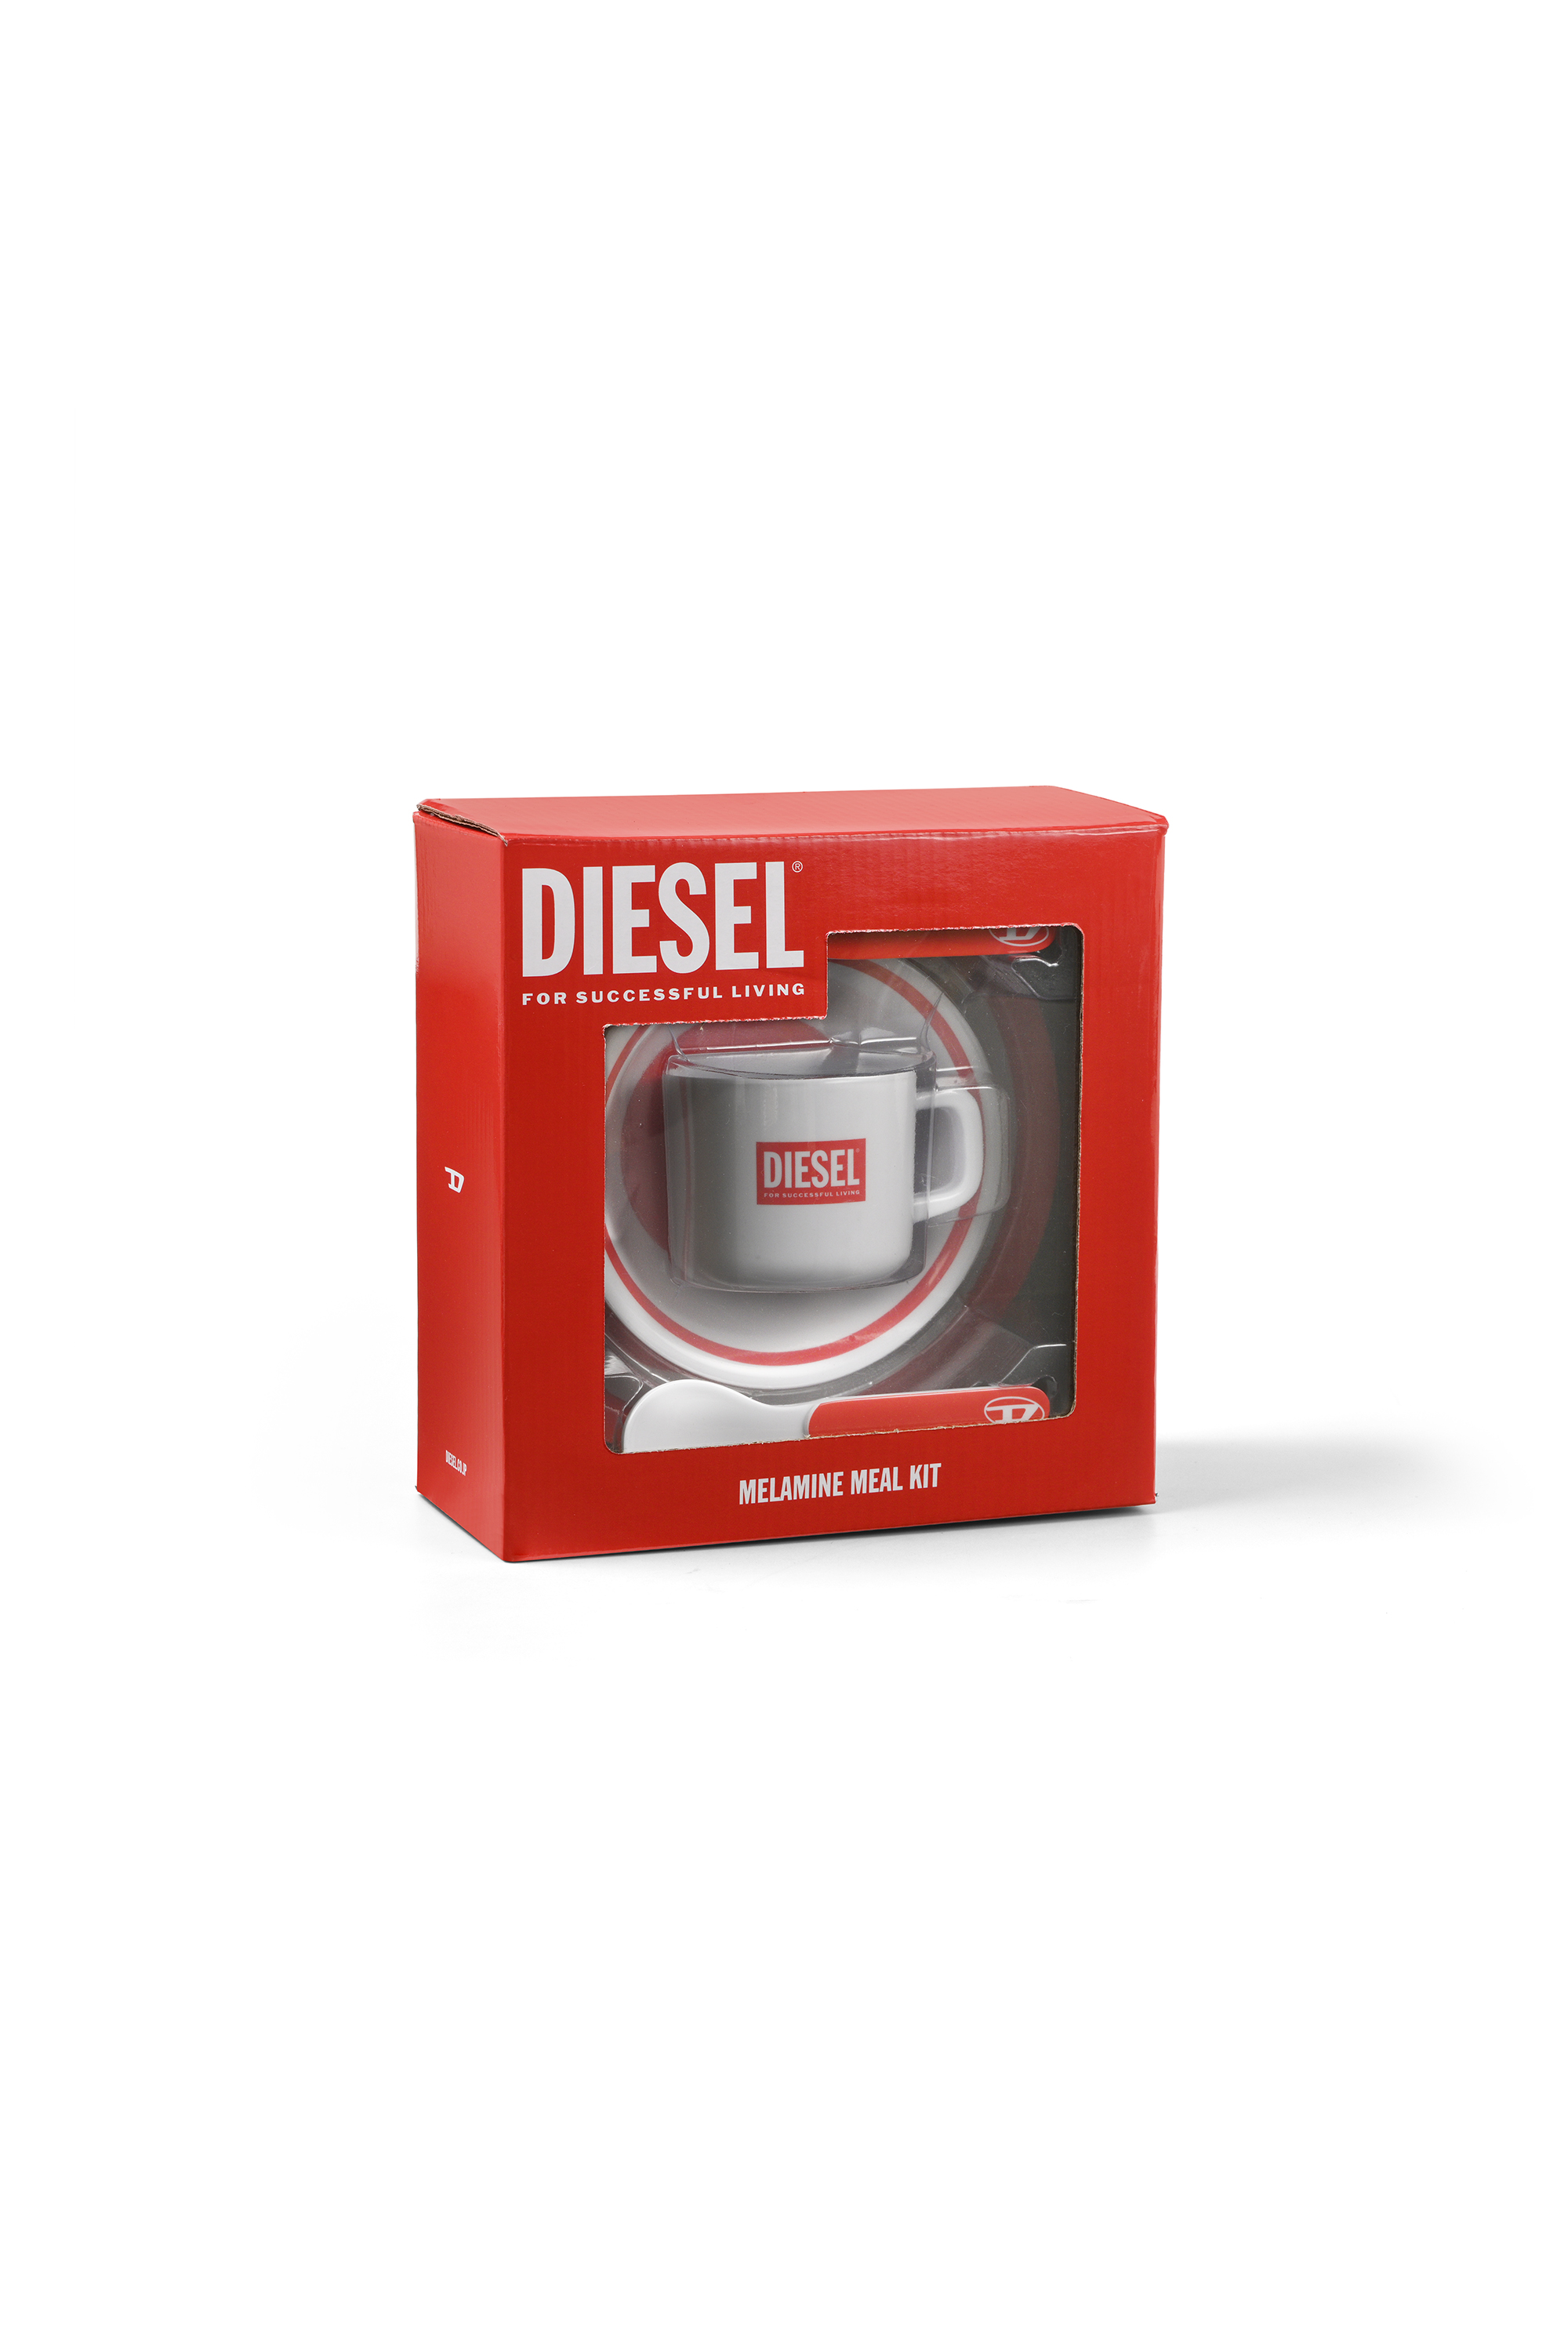 Diesel - MELAMINE MEAL KIT, レッド - Image 2